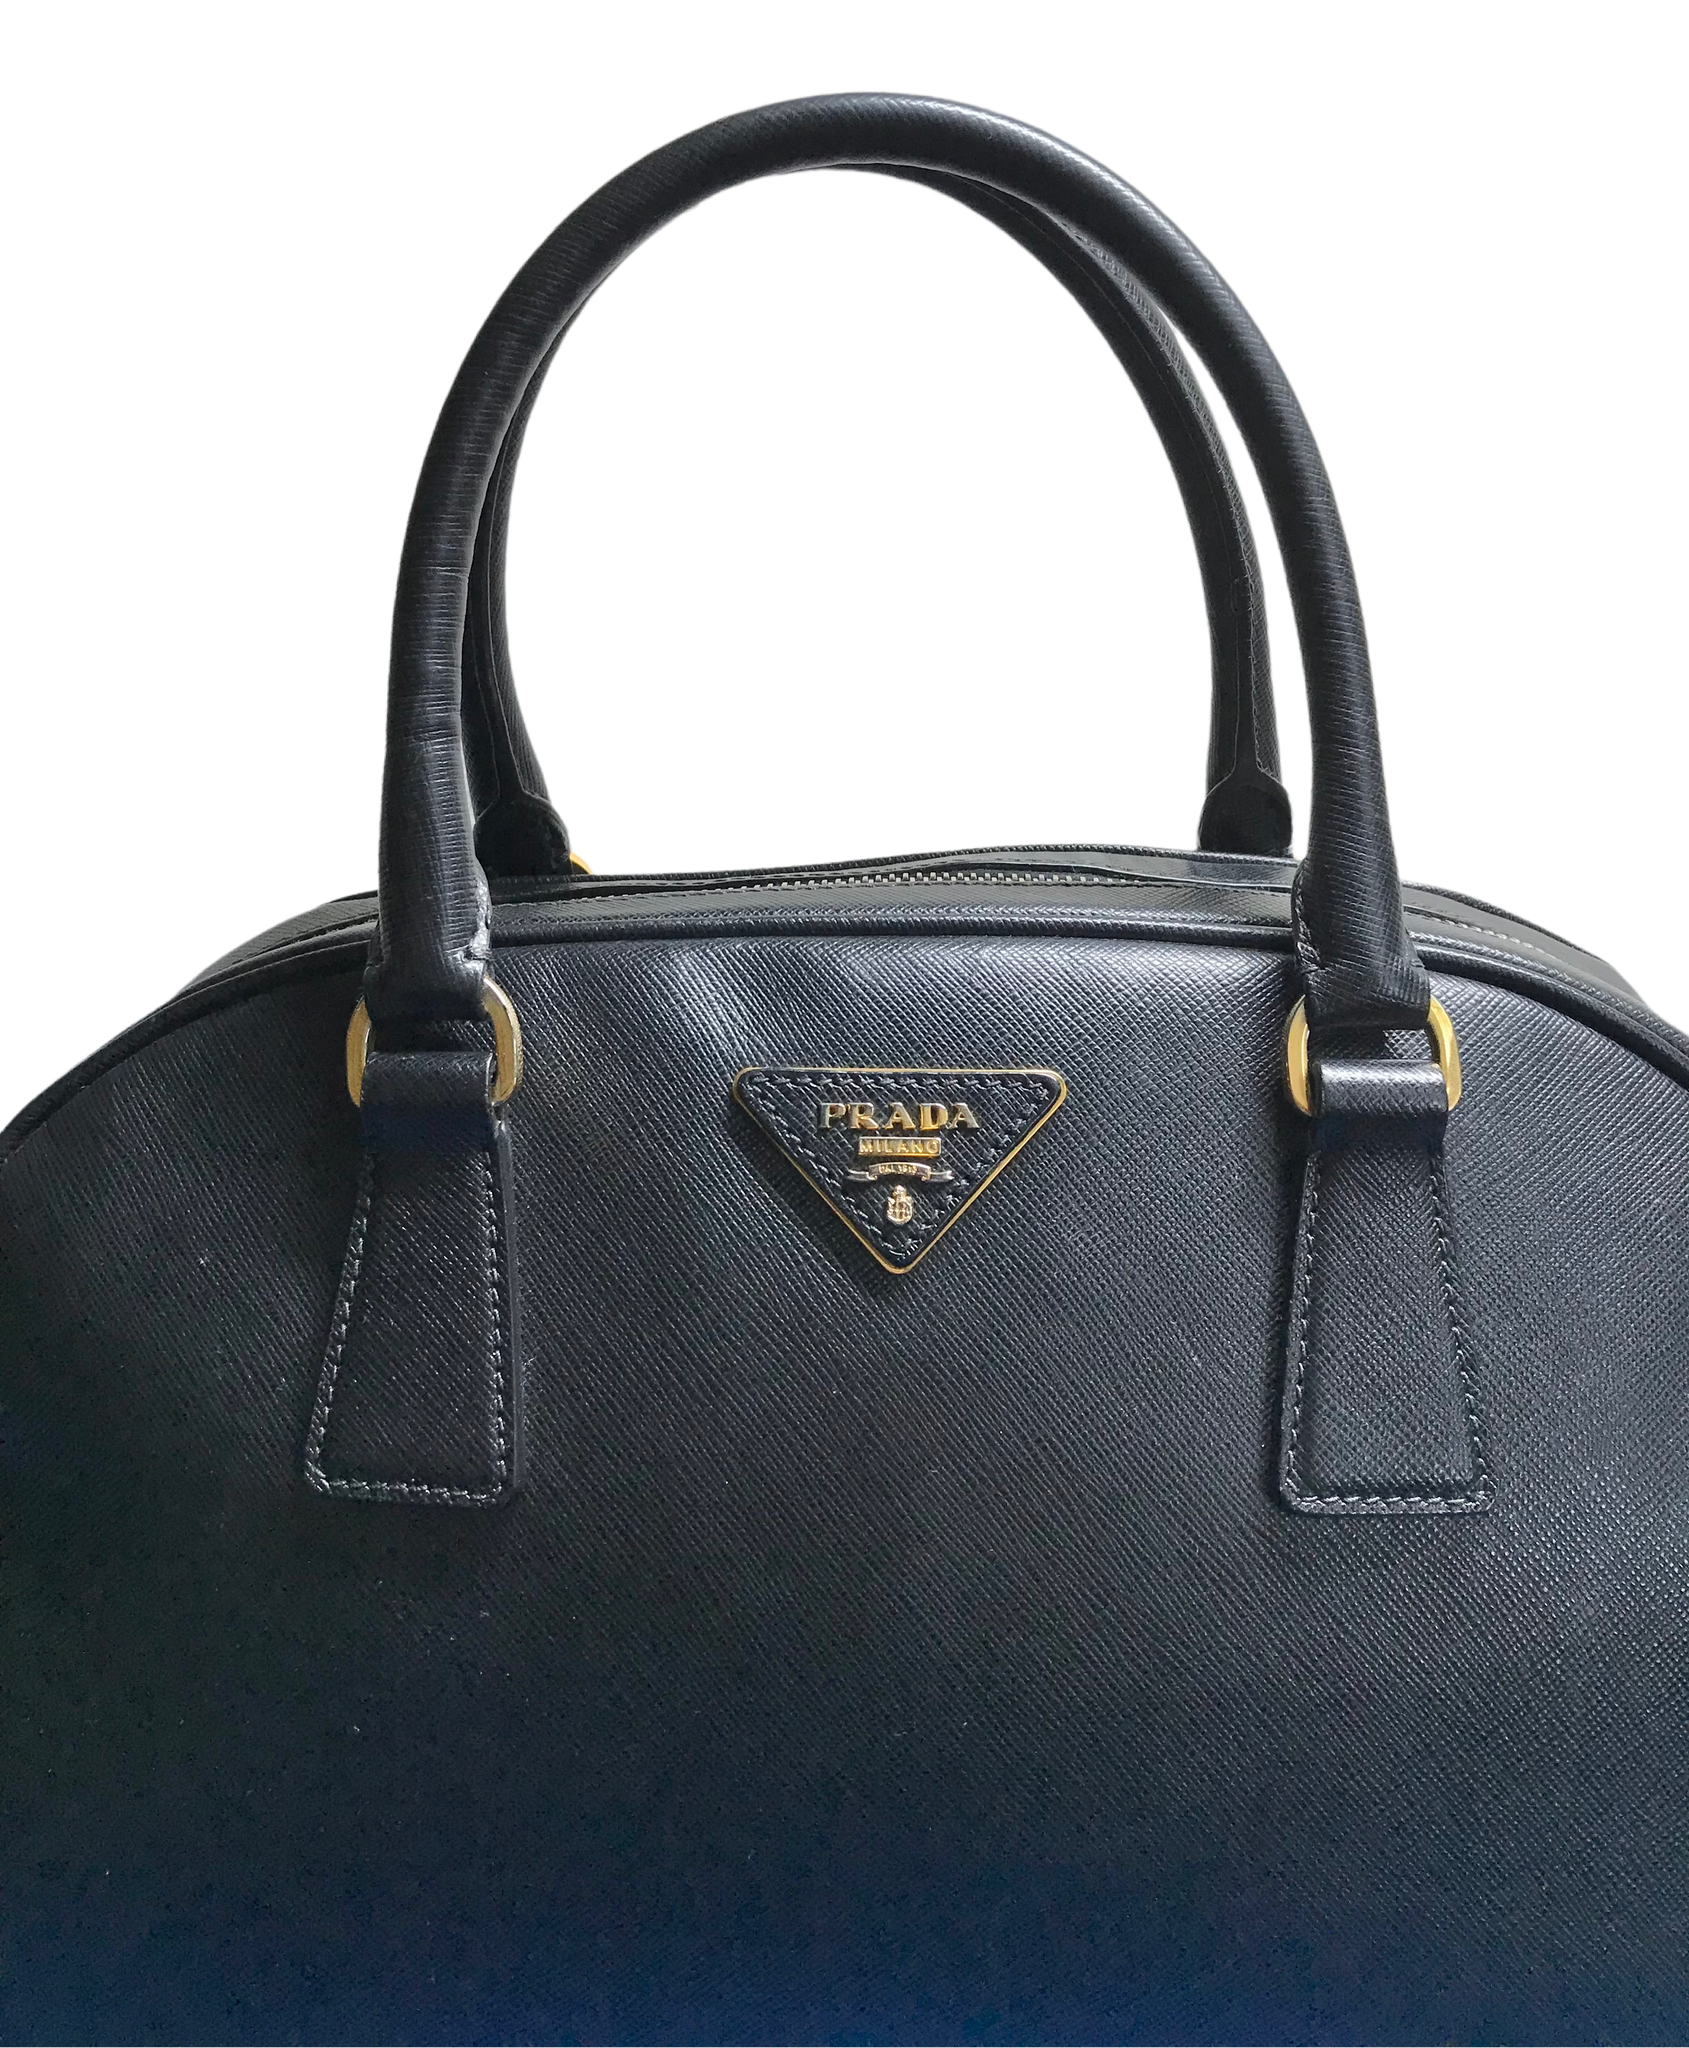 Authentic Prada Blue Saffiano Lux Leather Tote Bag